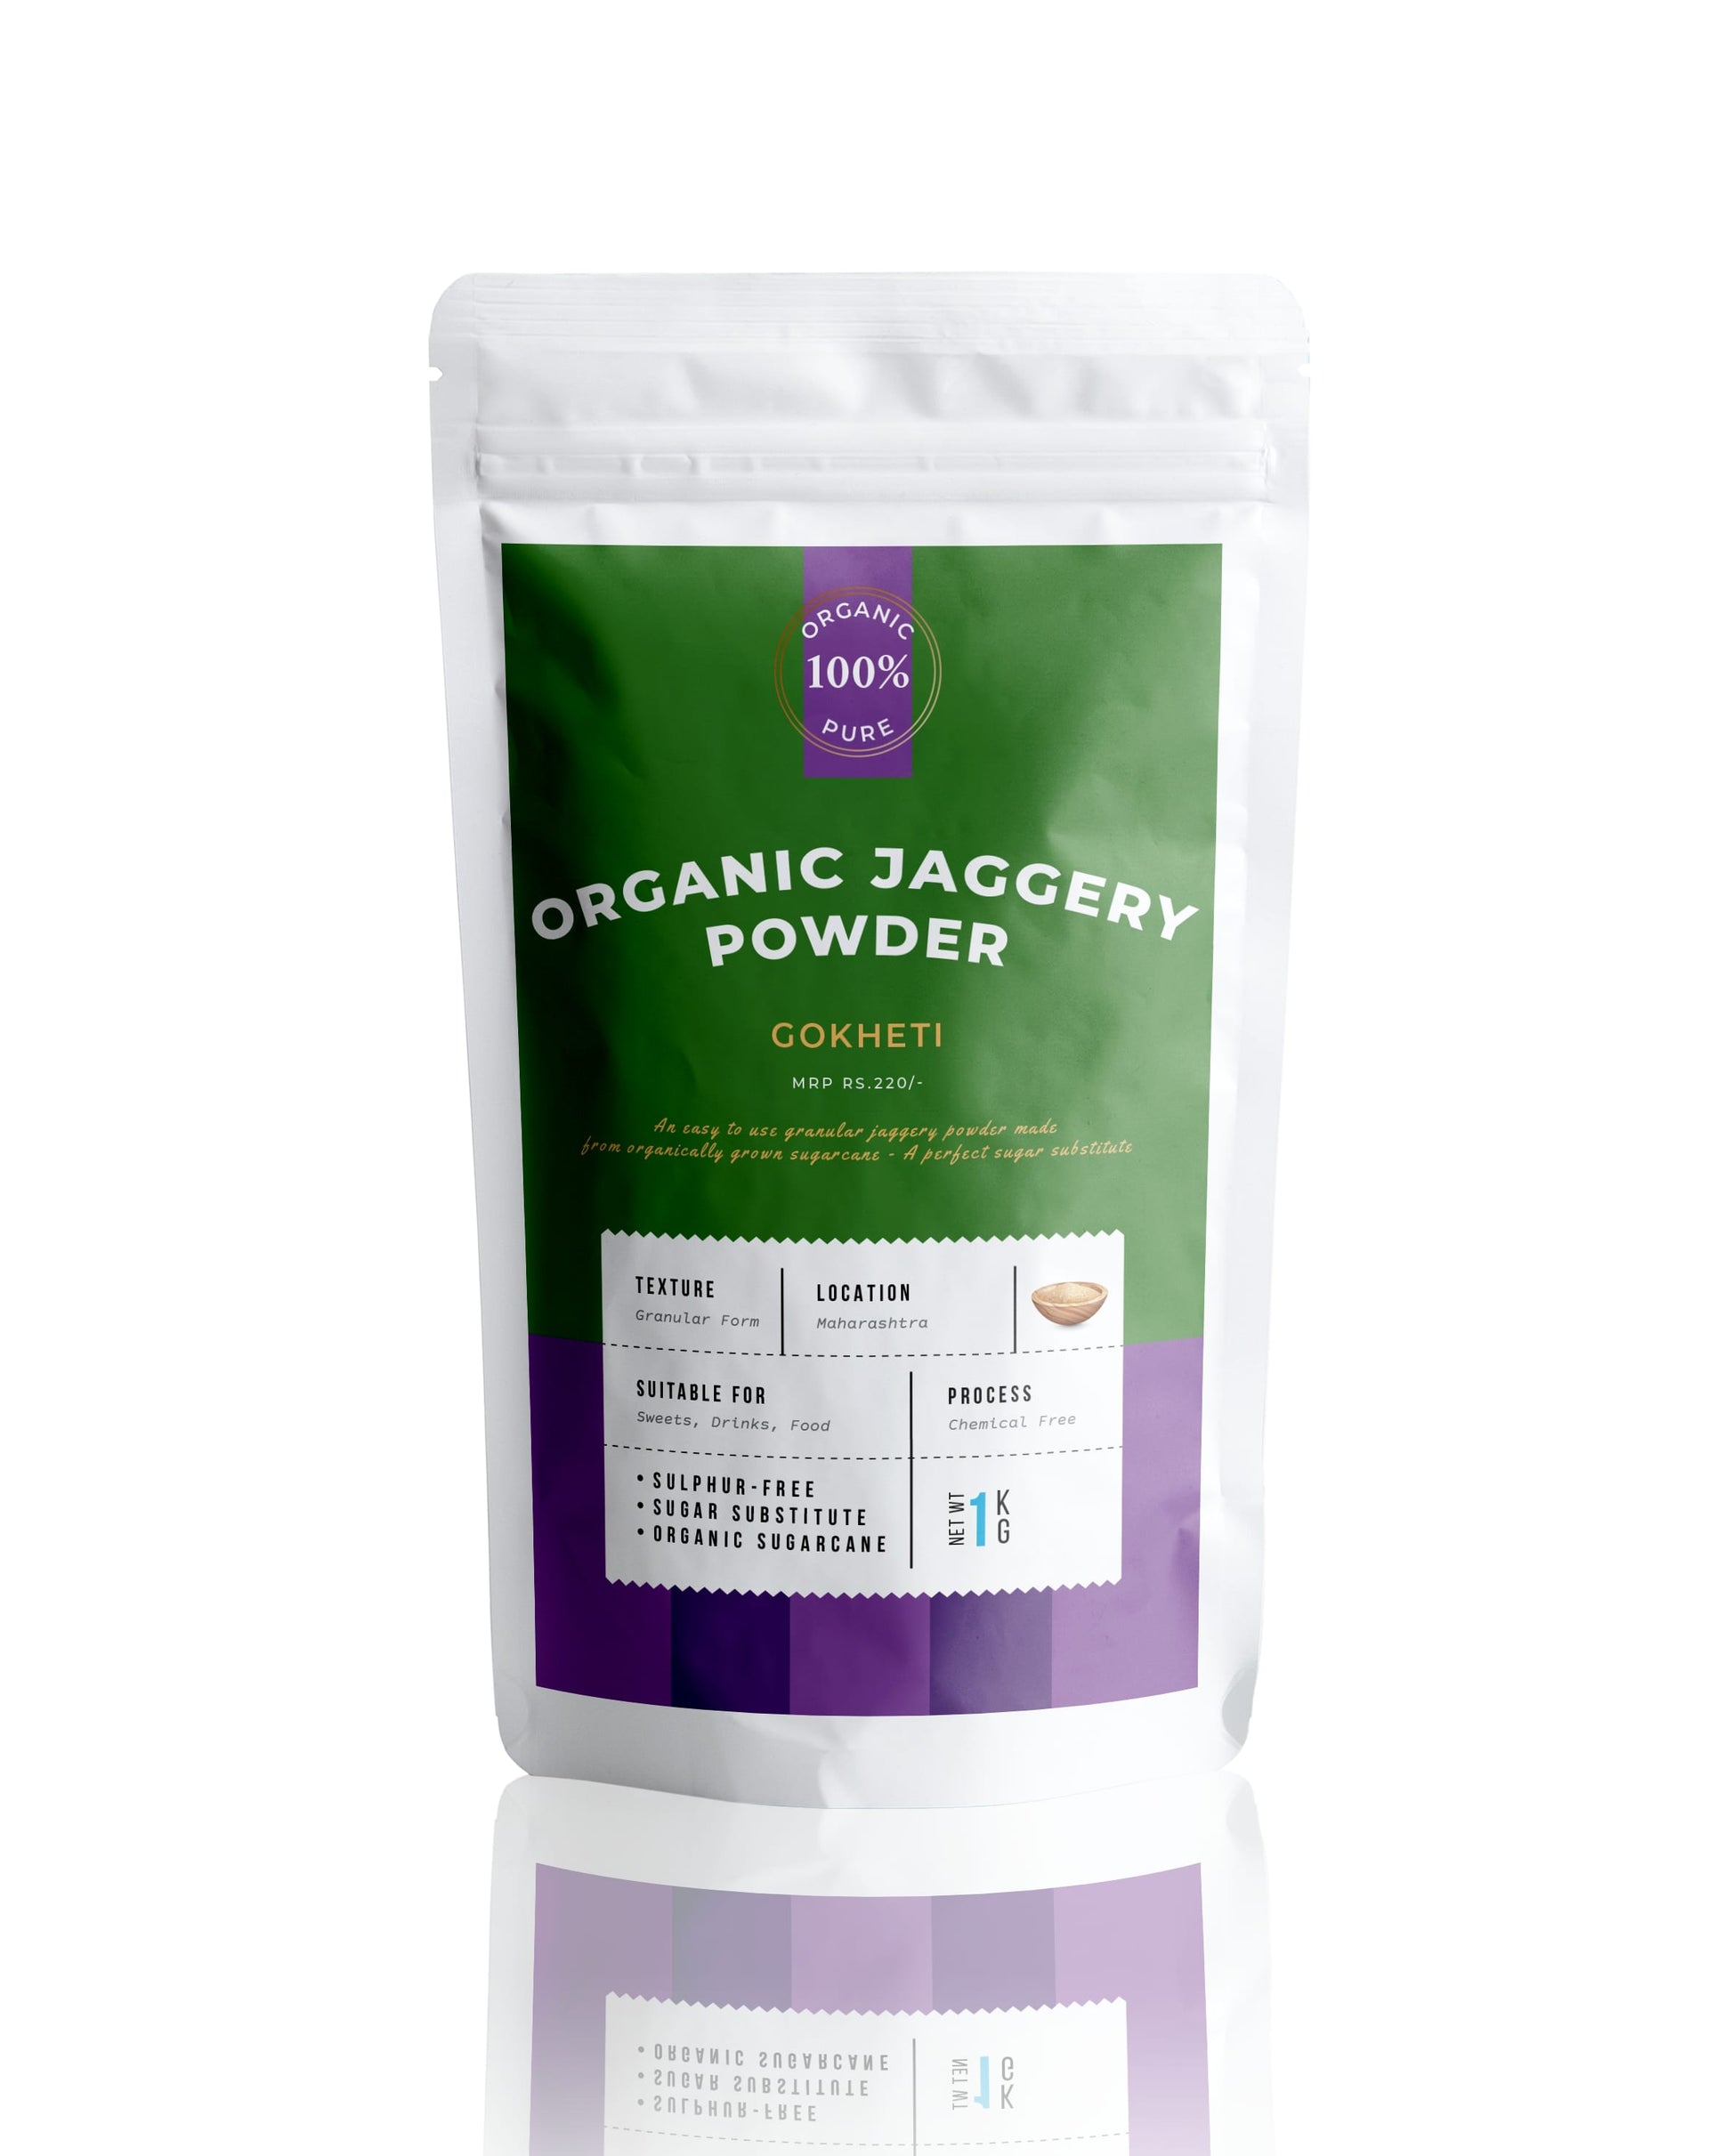 Buy crushed Organic Jaggery powder online